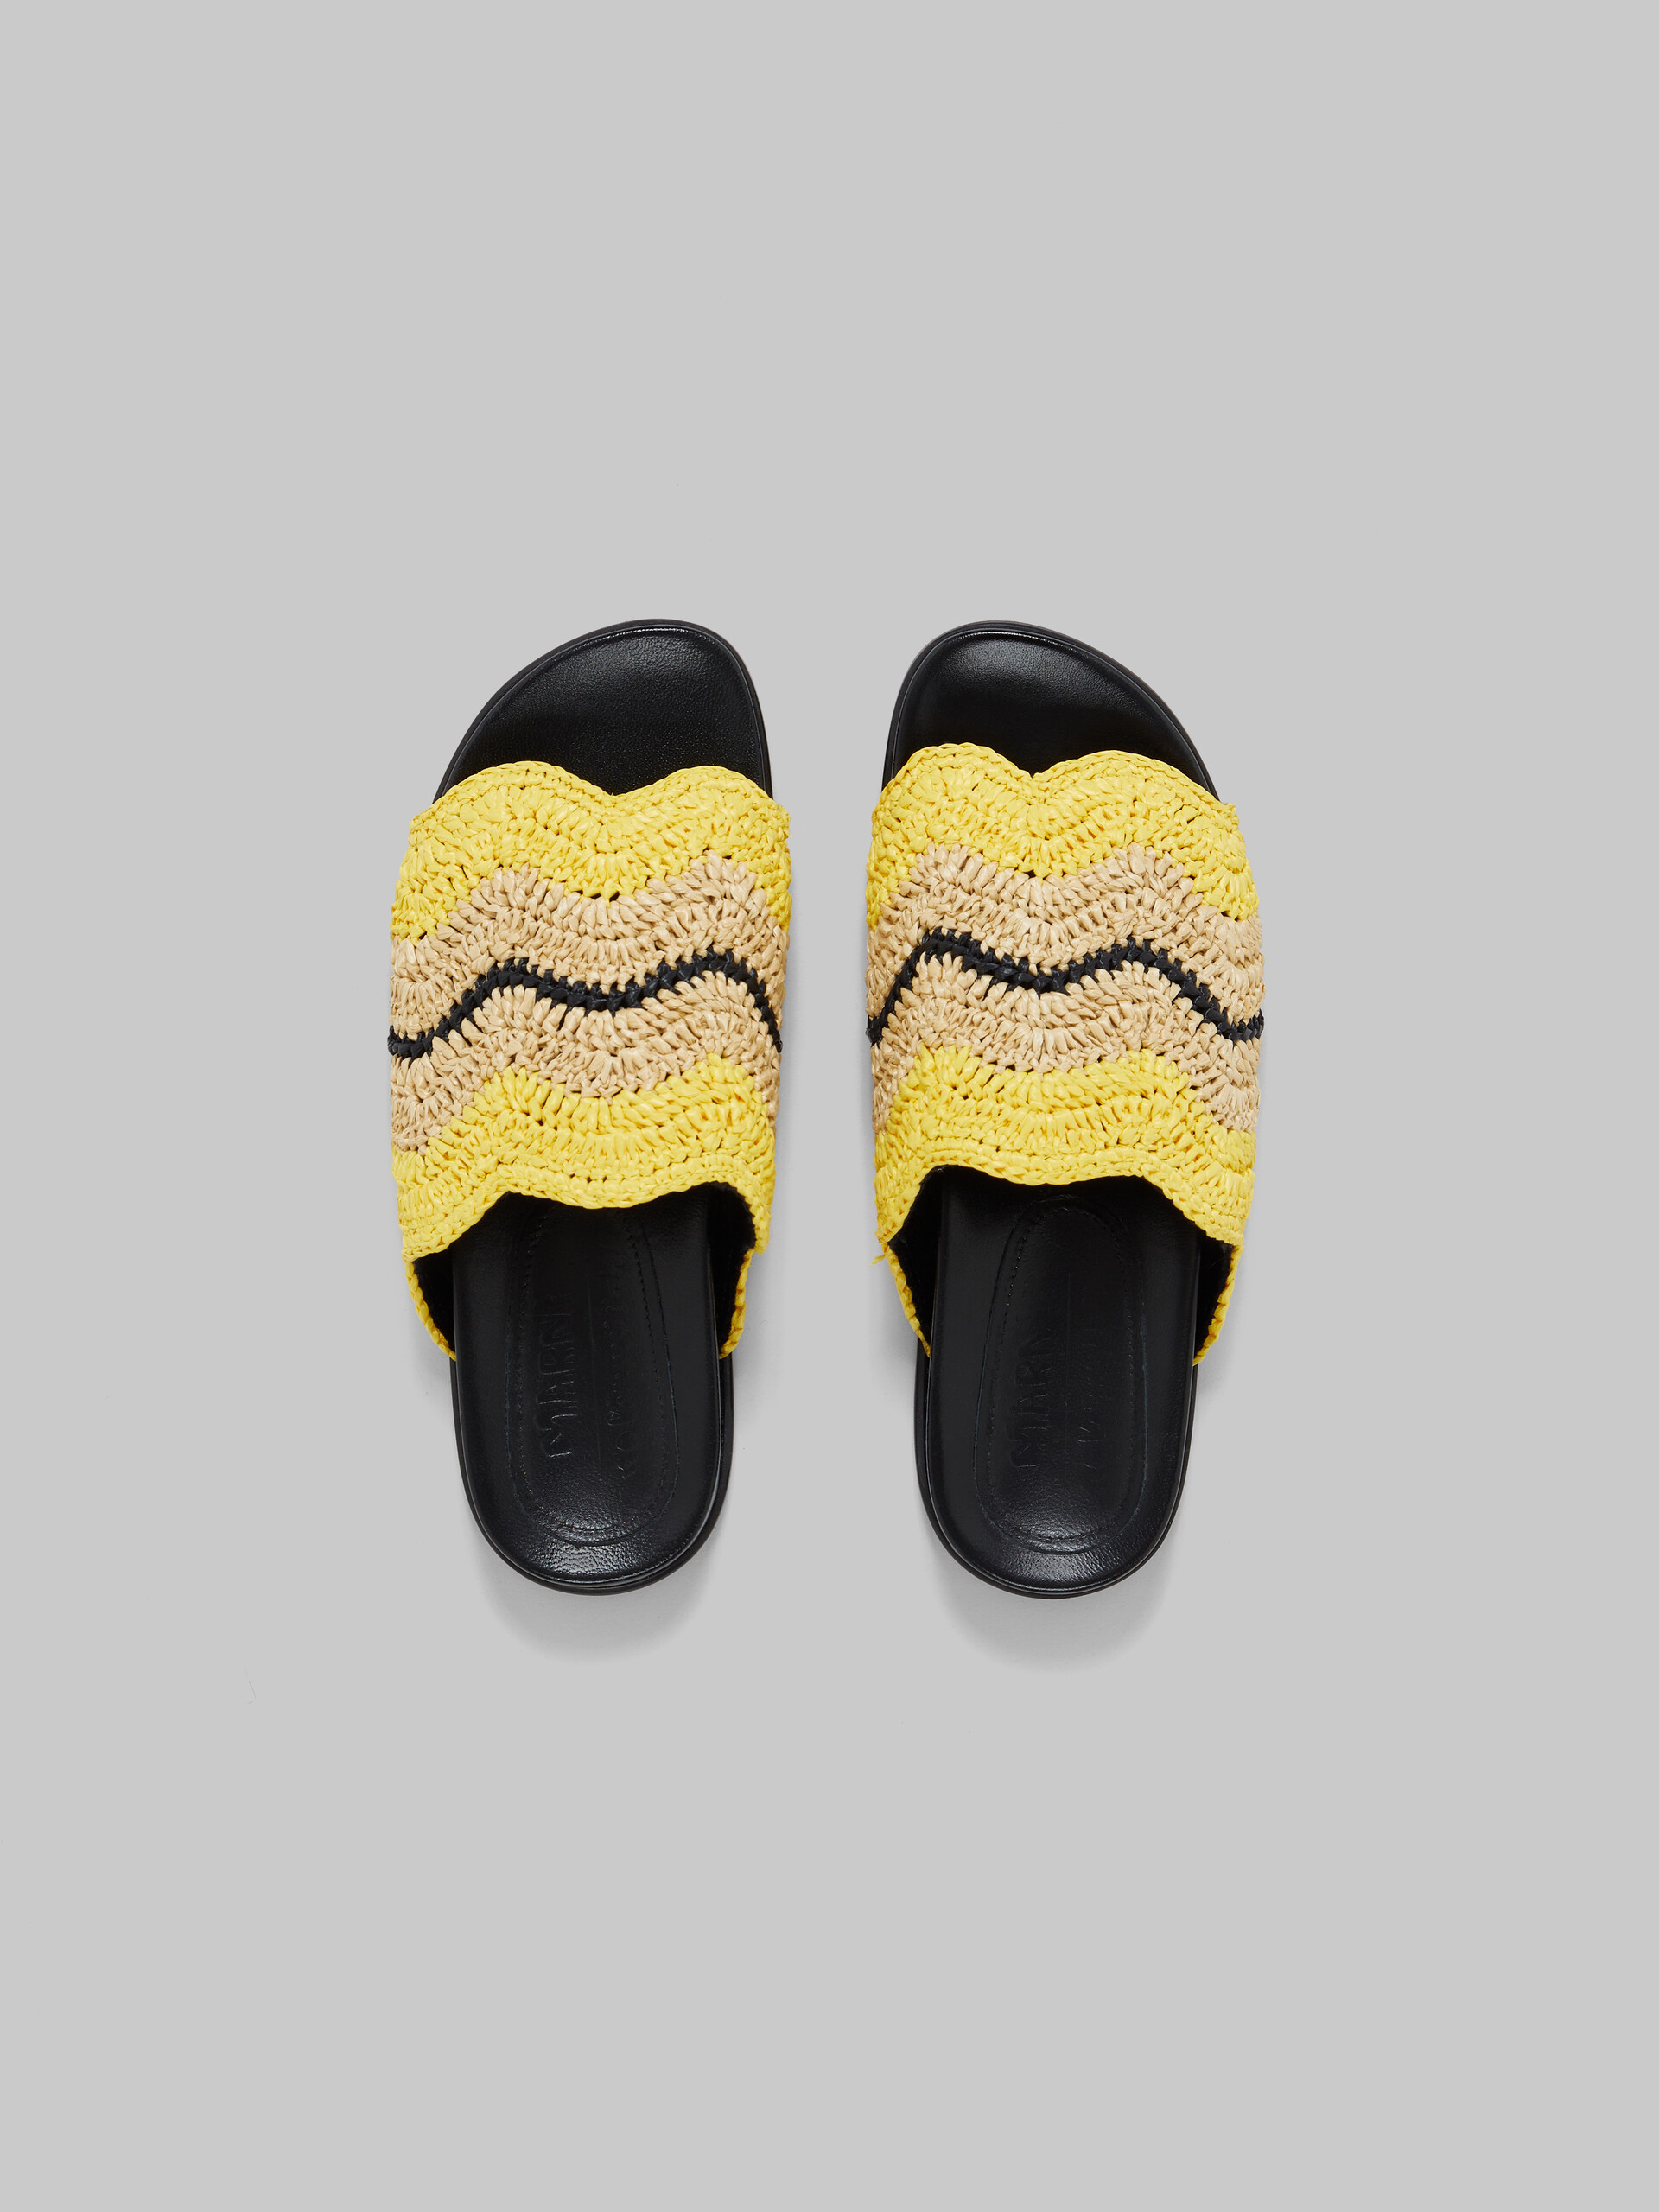 Marni x No Vacancy Inn - Yellow crochet raffia slide - Sandals - Image 4